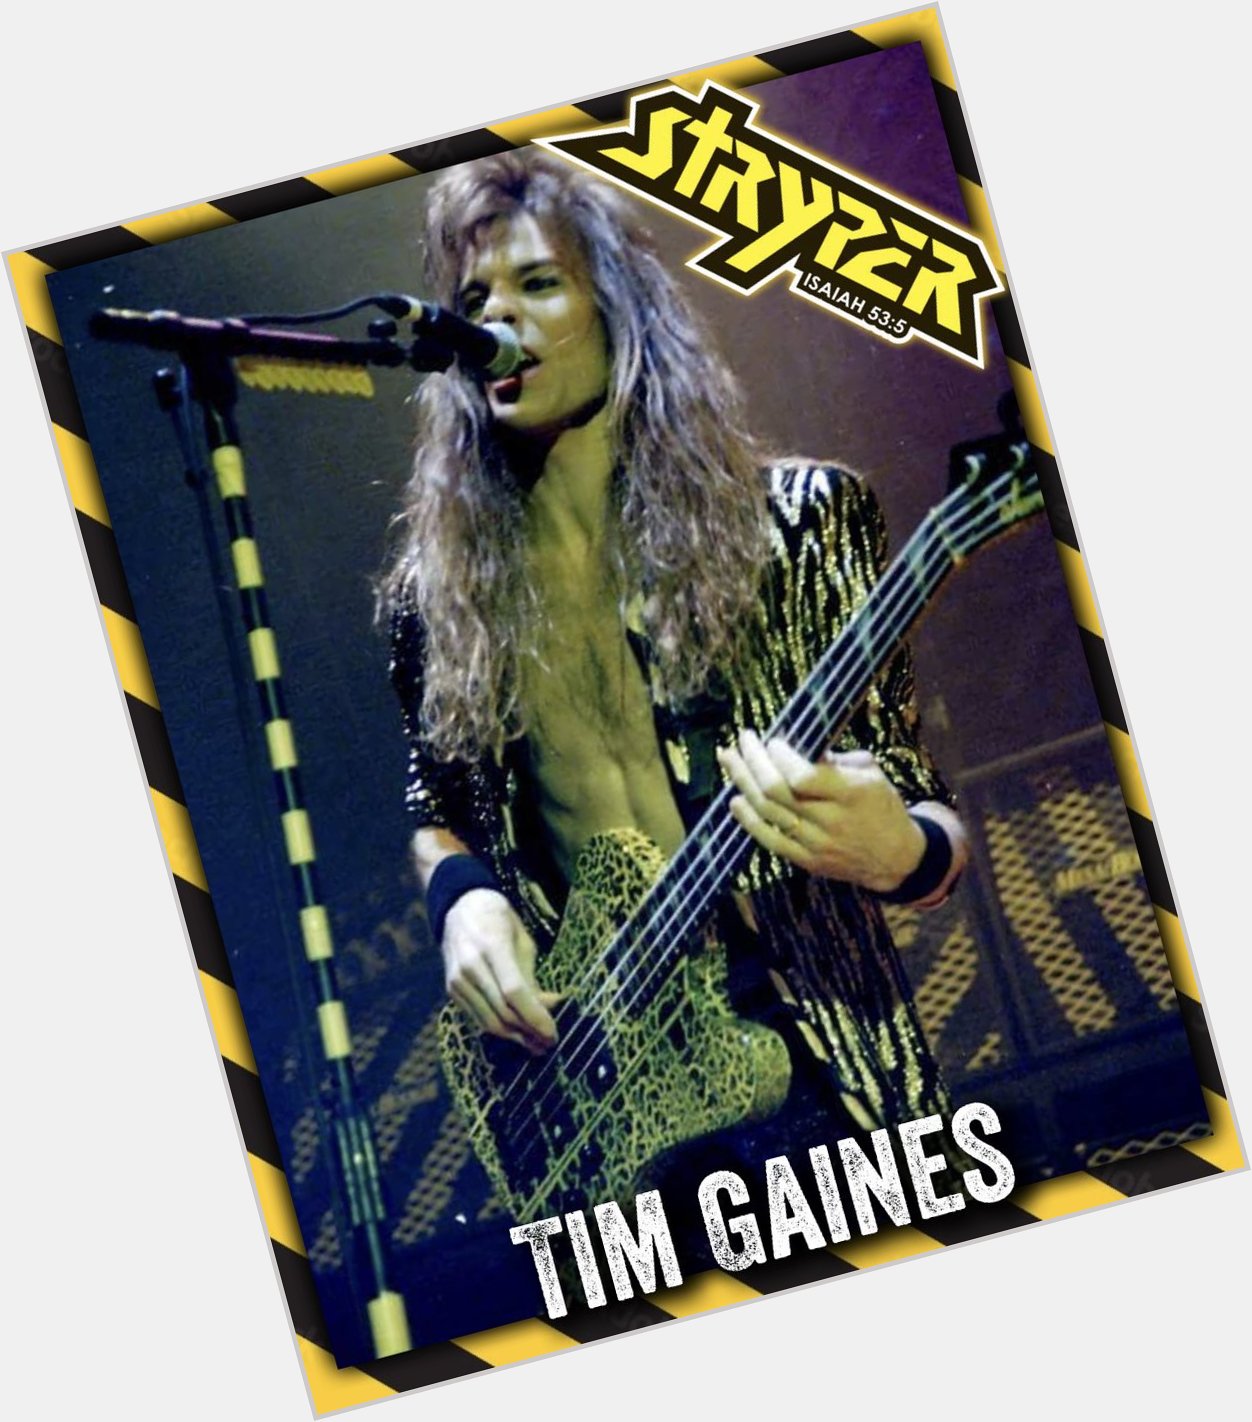   Happy Birthday Tim Gaines
Bassist for Stryper December 15, 1962 
Portland, Oregon 